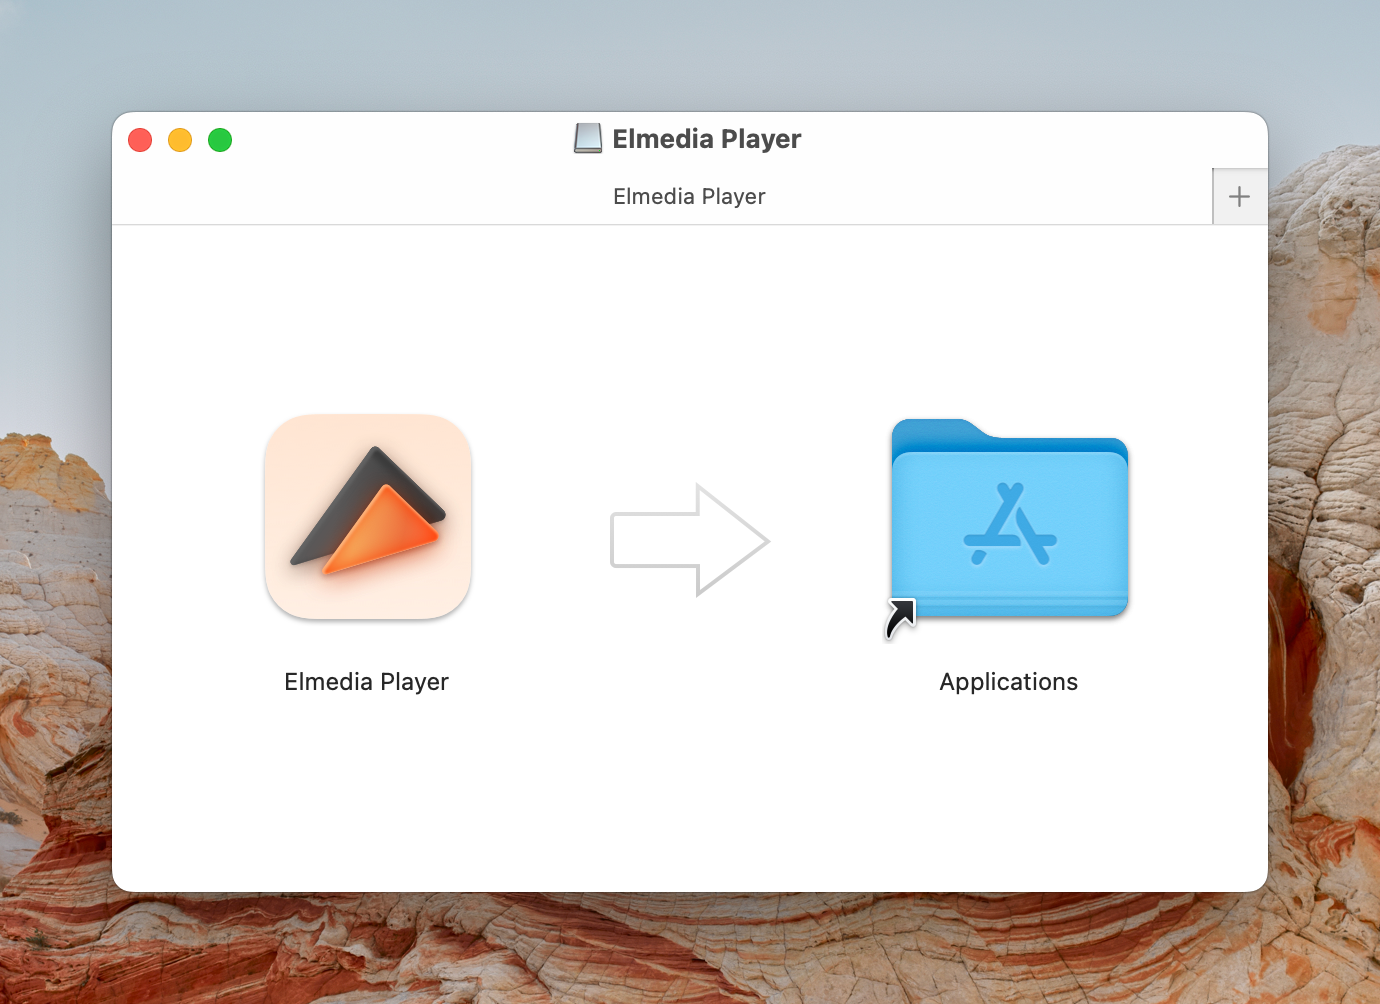 Dragging the Elmedia Player app to the Applications folder.